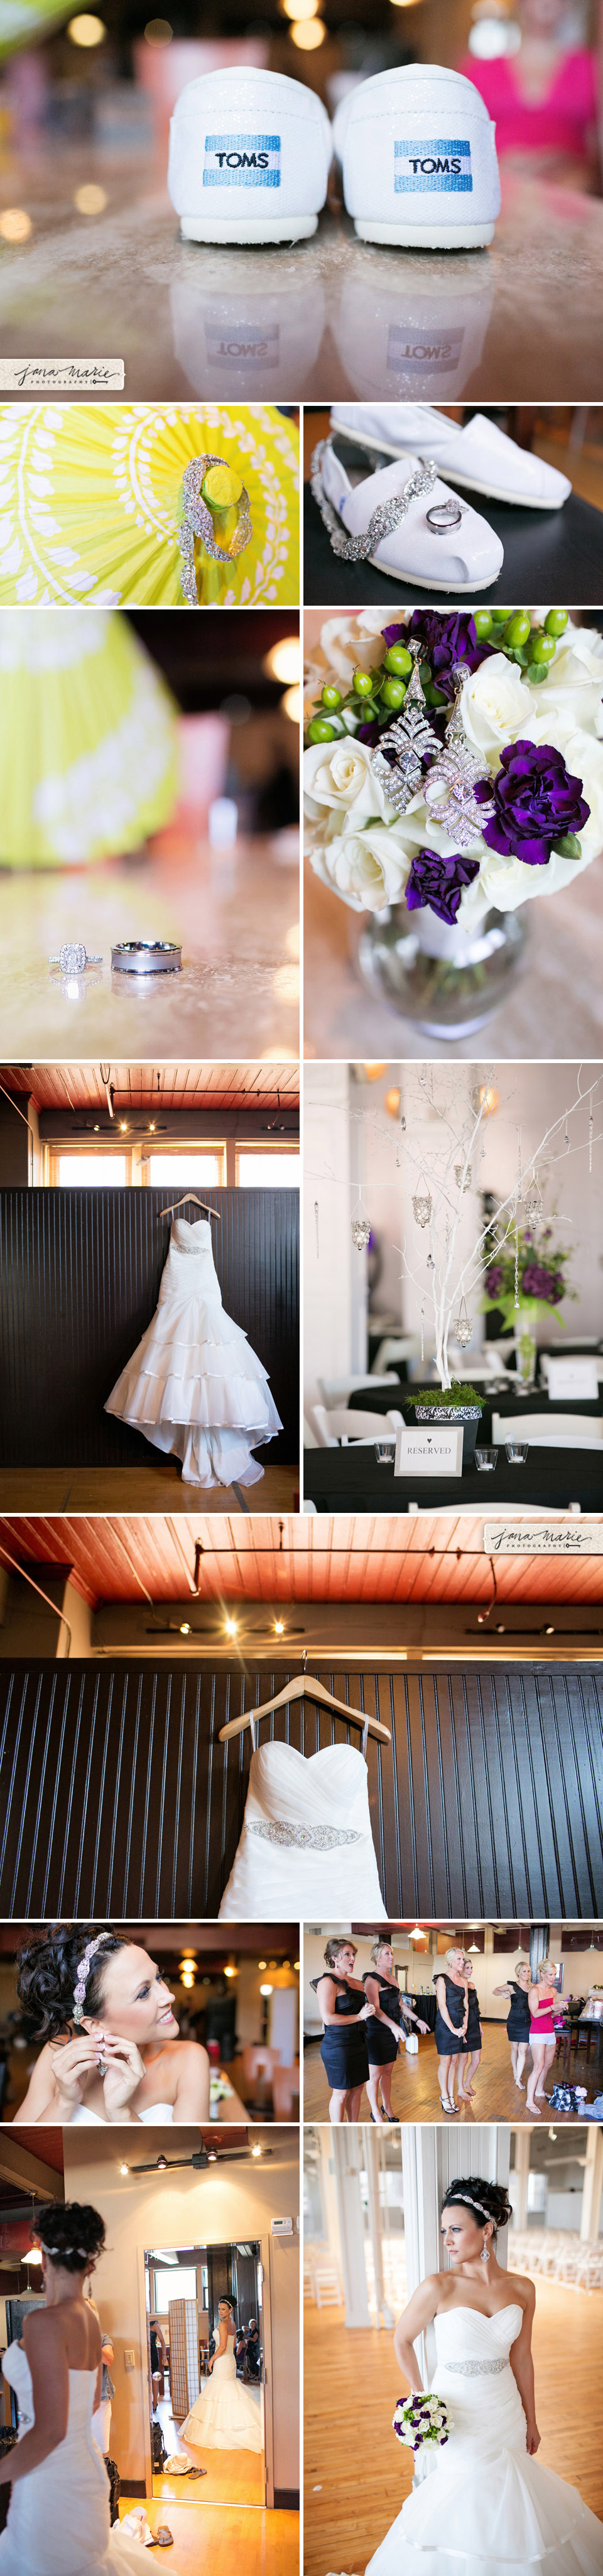 details, bridal suites, purple and green vision boards, Receptions, Kansas City wedding photography, Jana Marler